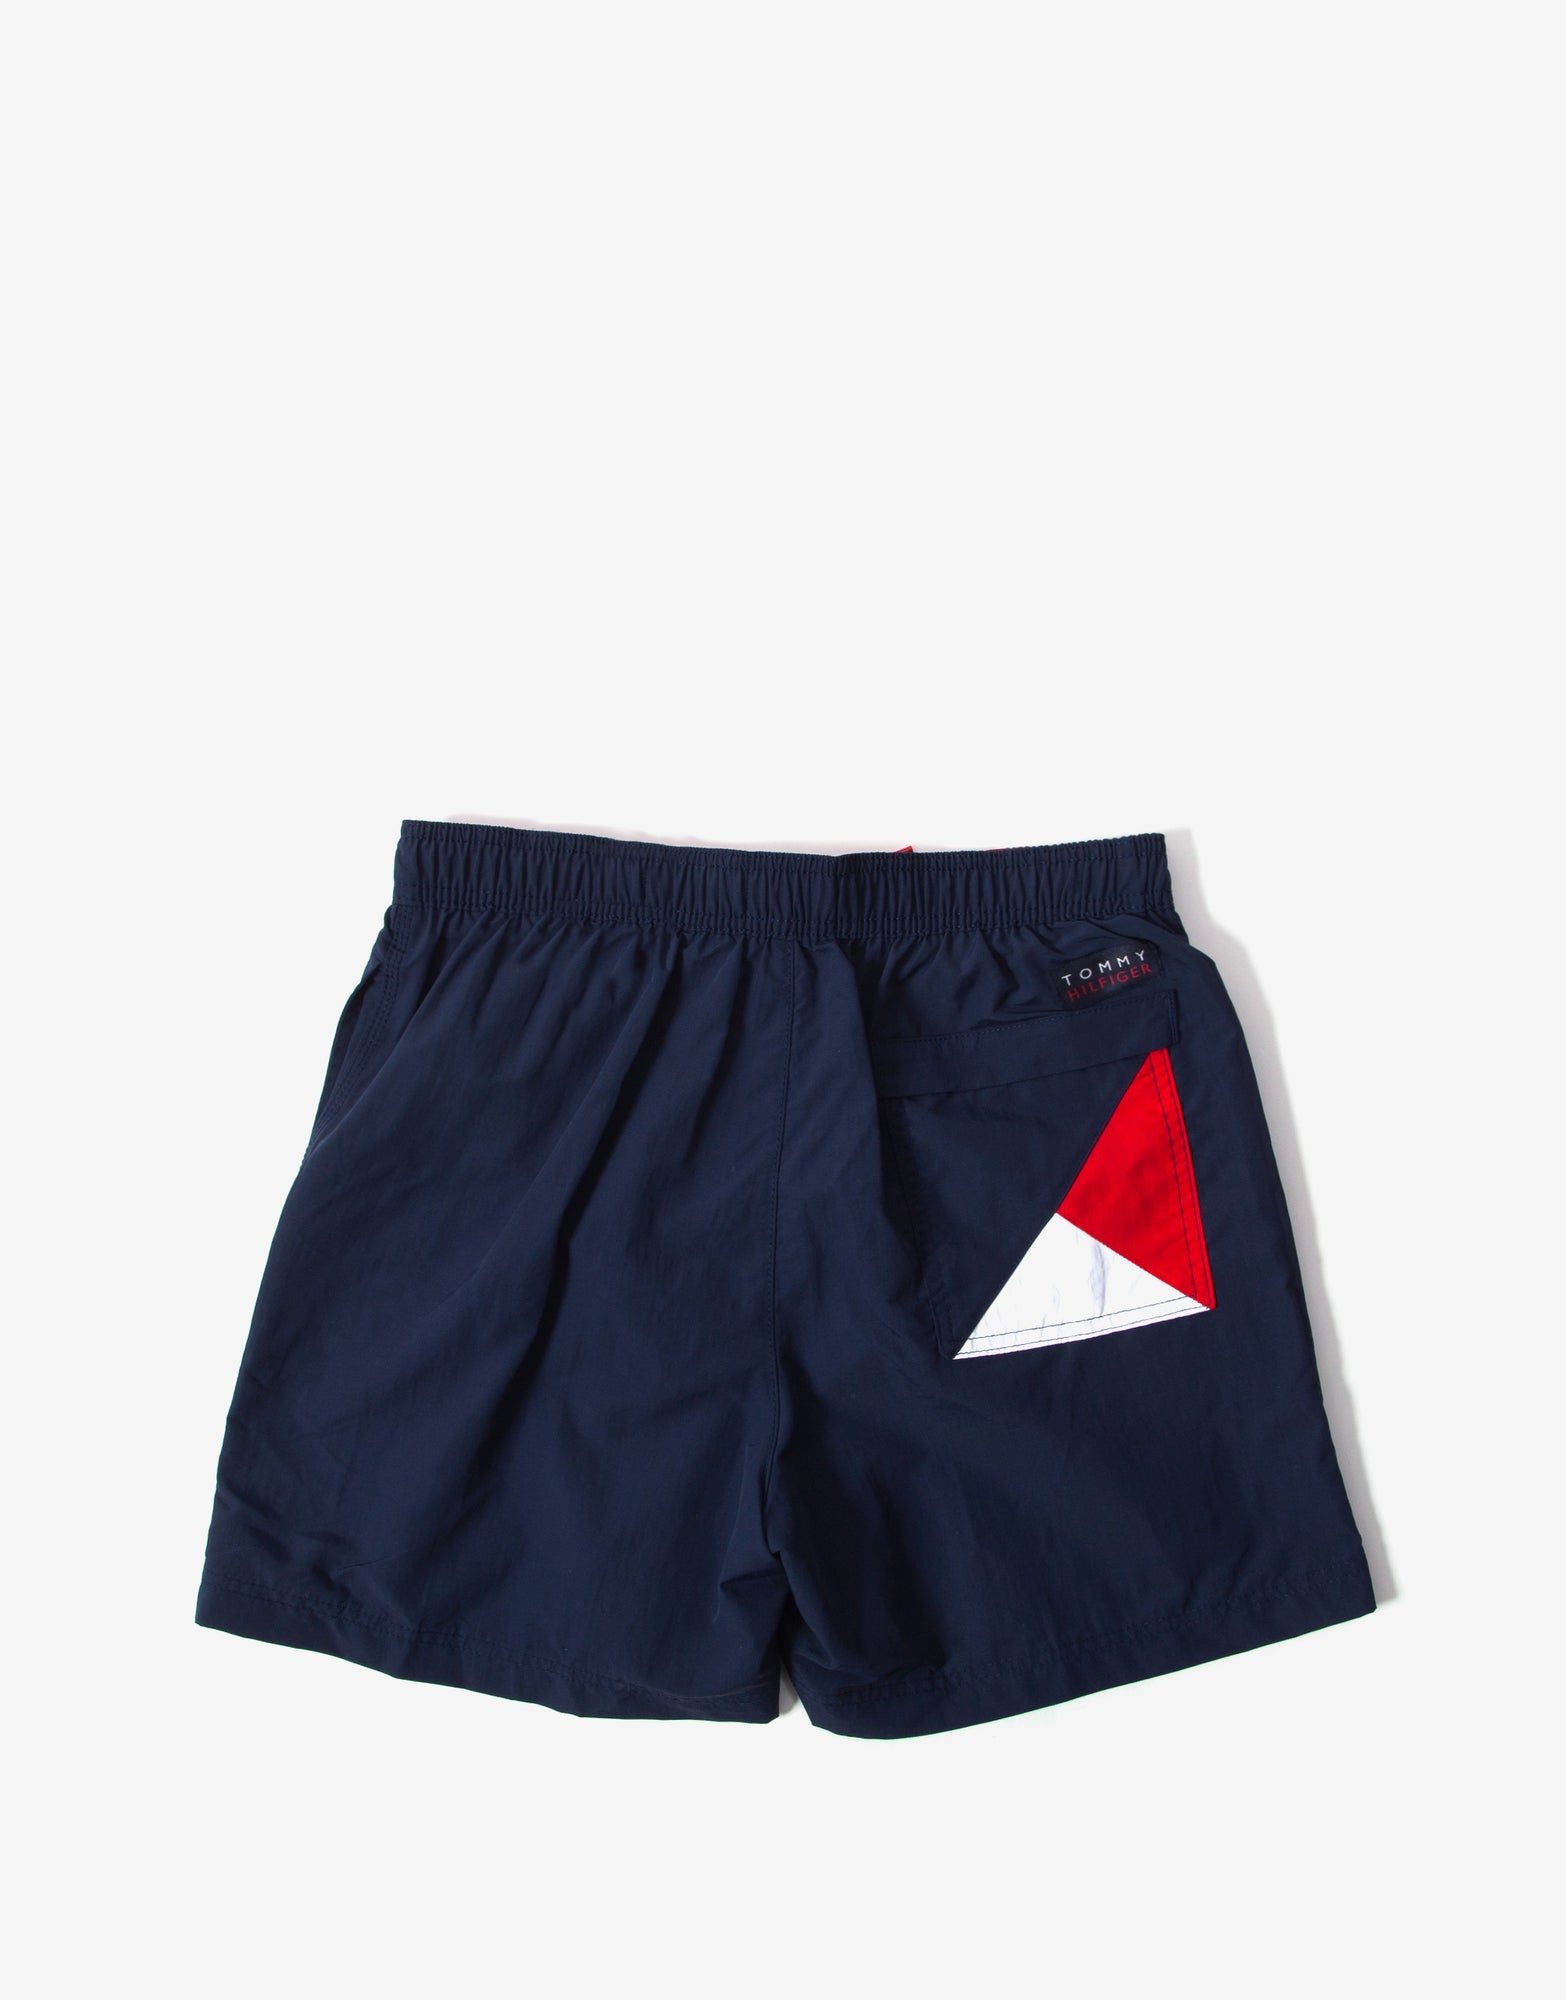 hilfiger swim shorts